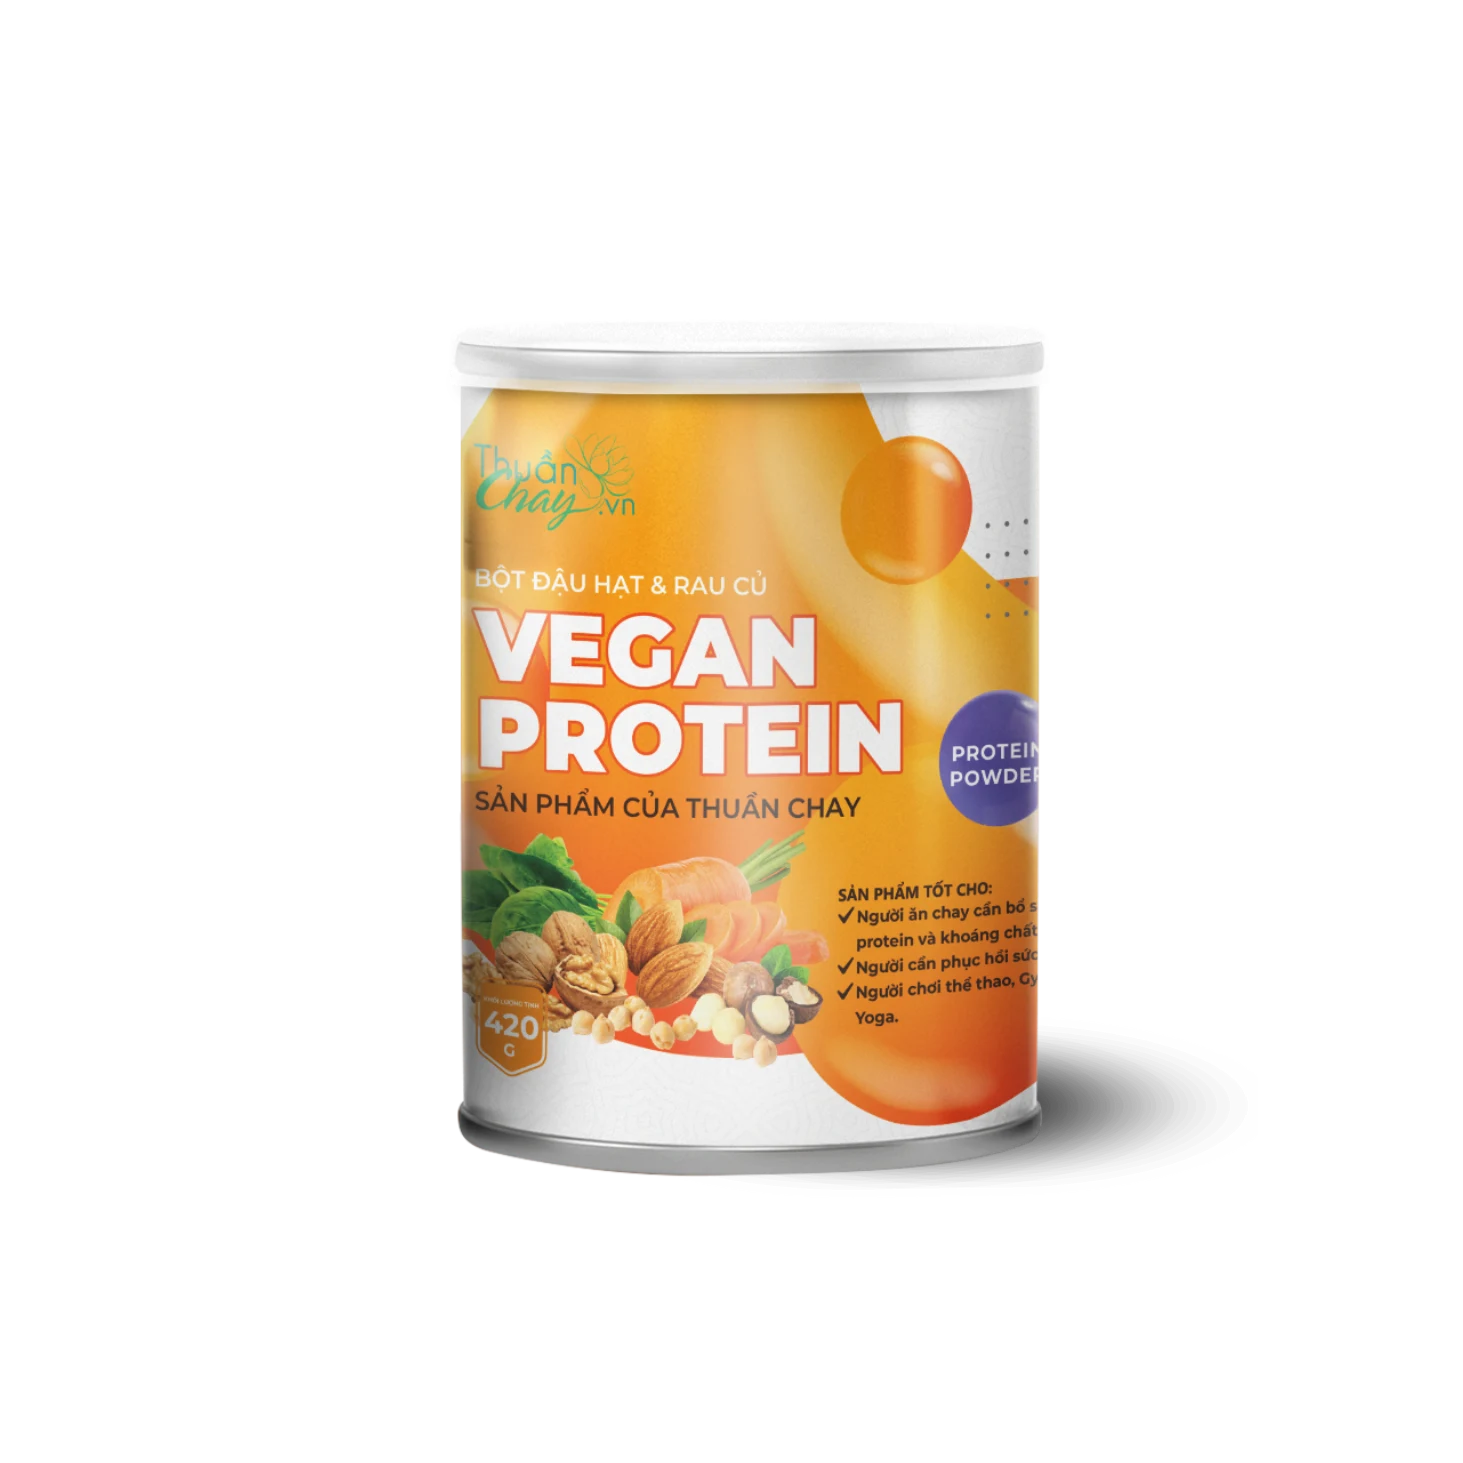 Vegan protein bổ sung protein thực vật